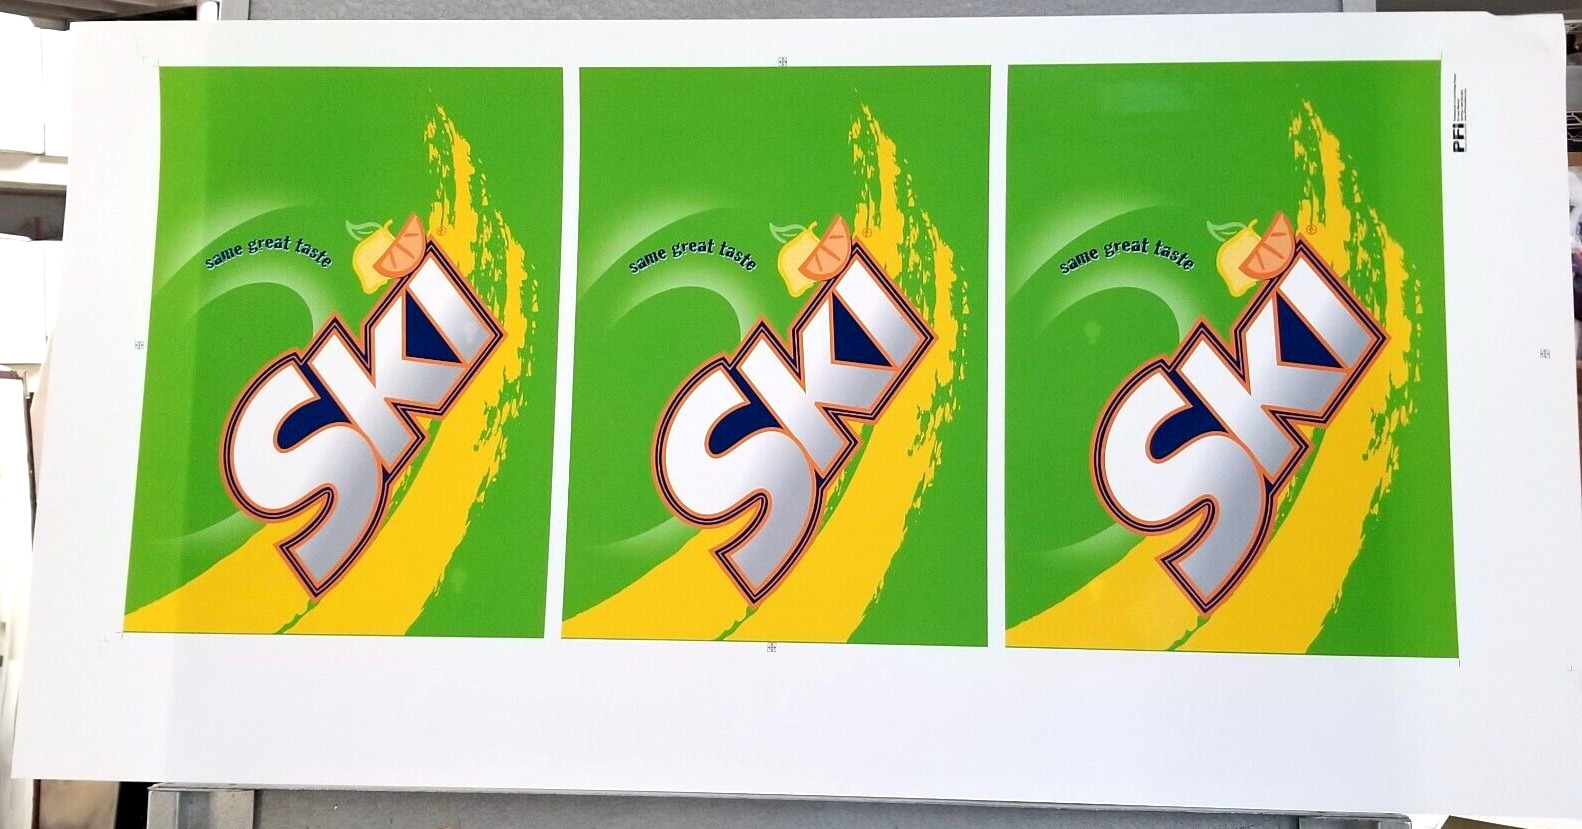 Ski Soda Preproduction Advertising Art Work Same Great Taste Yellow Green 2006